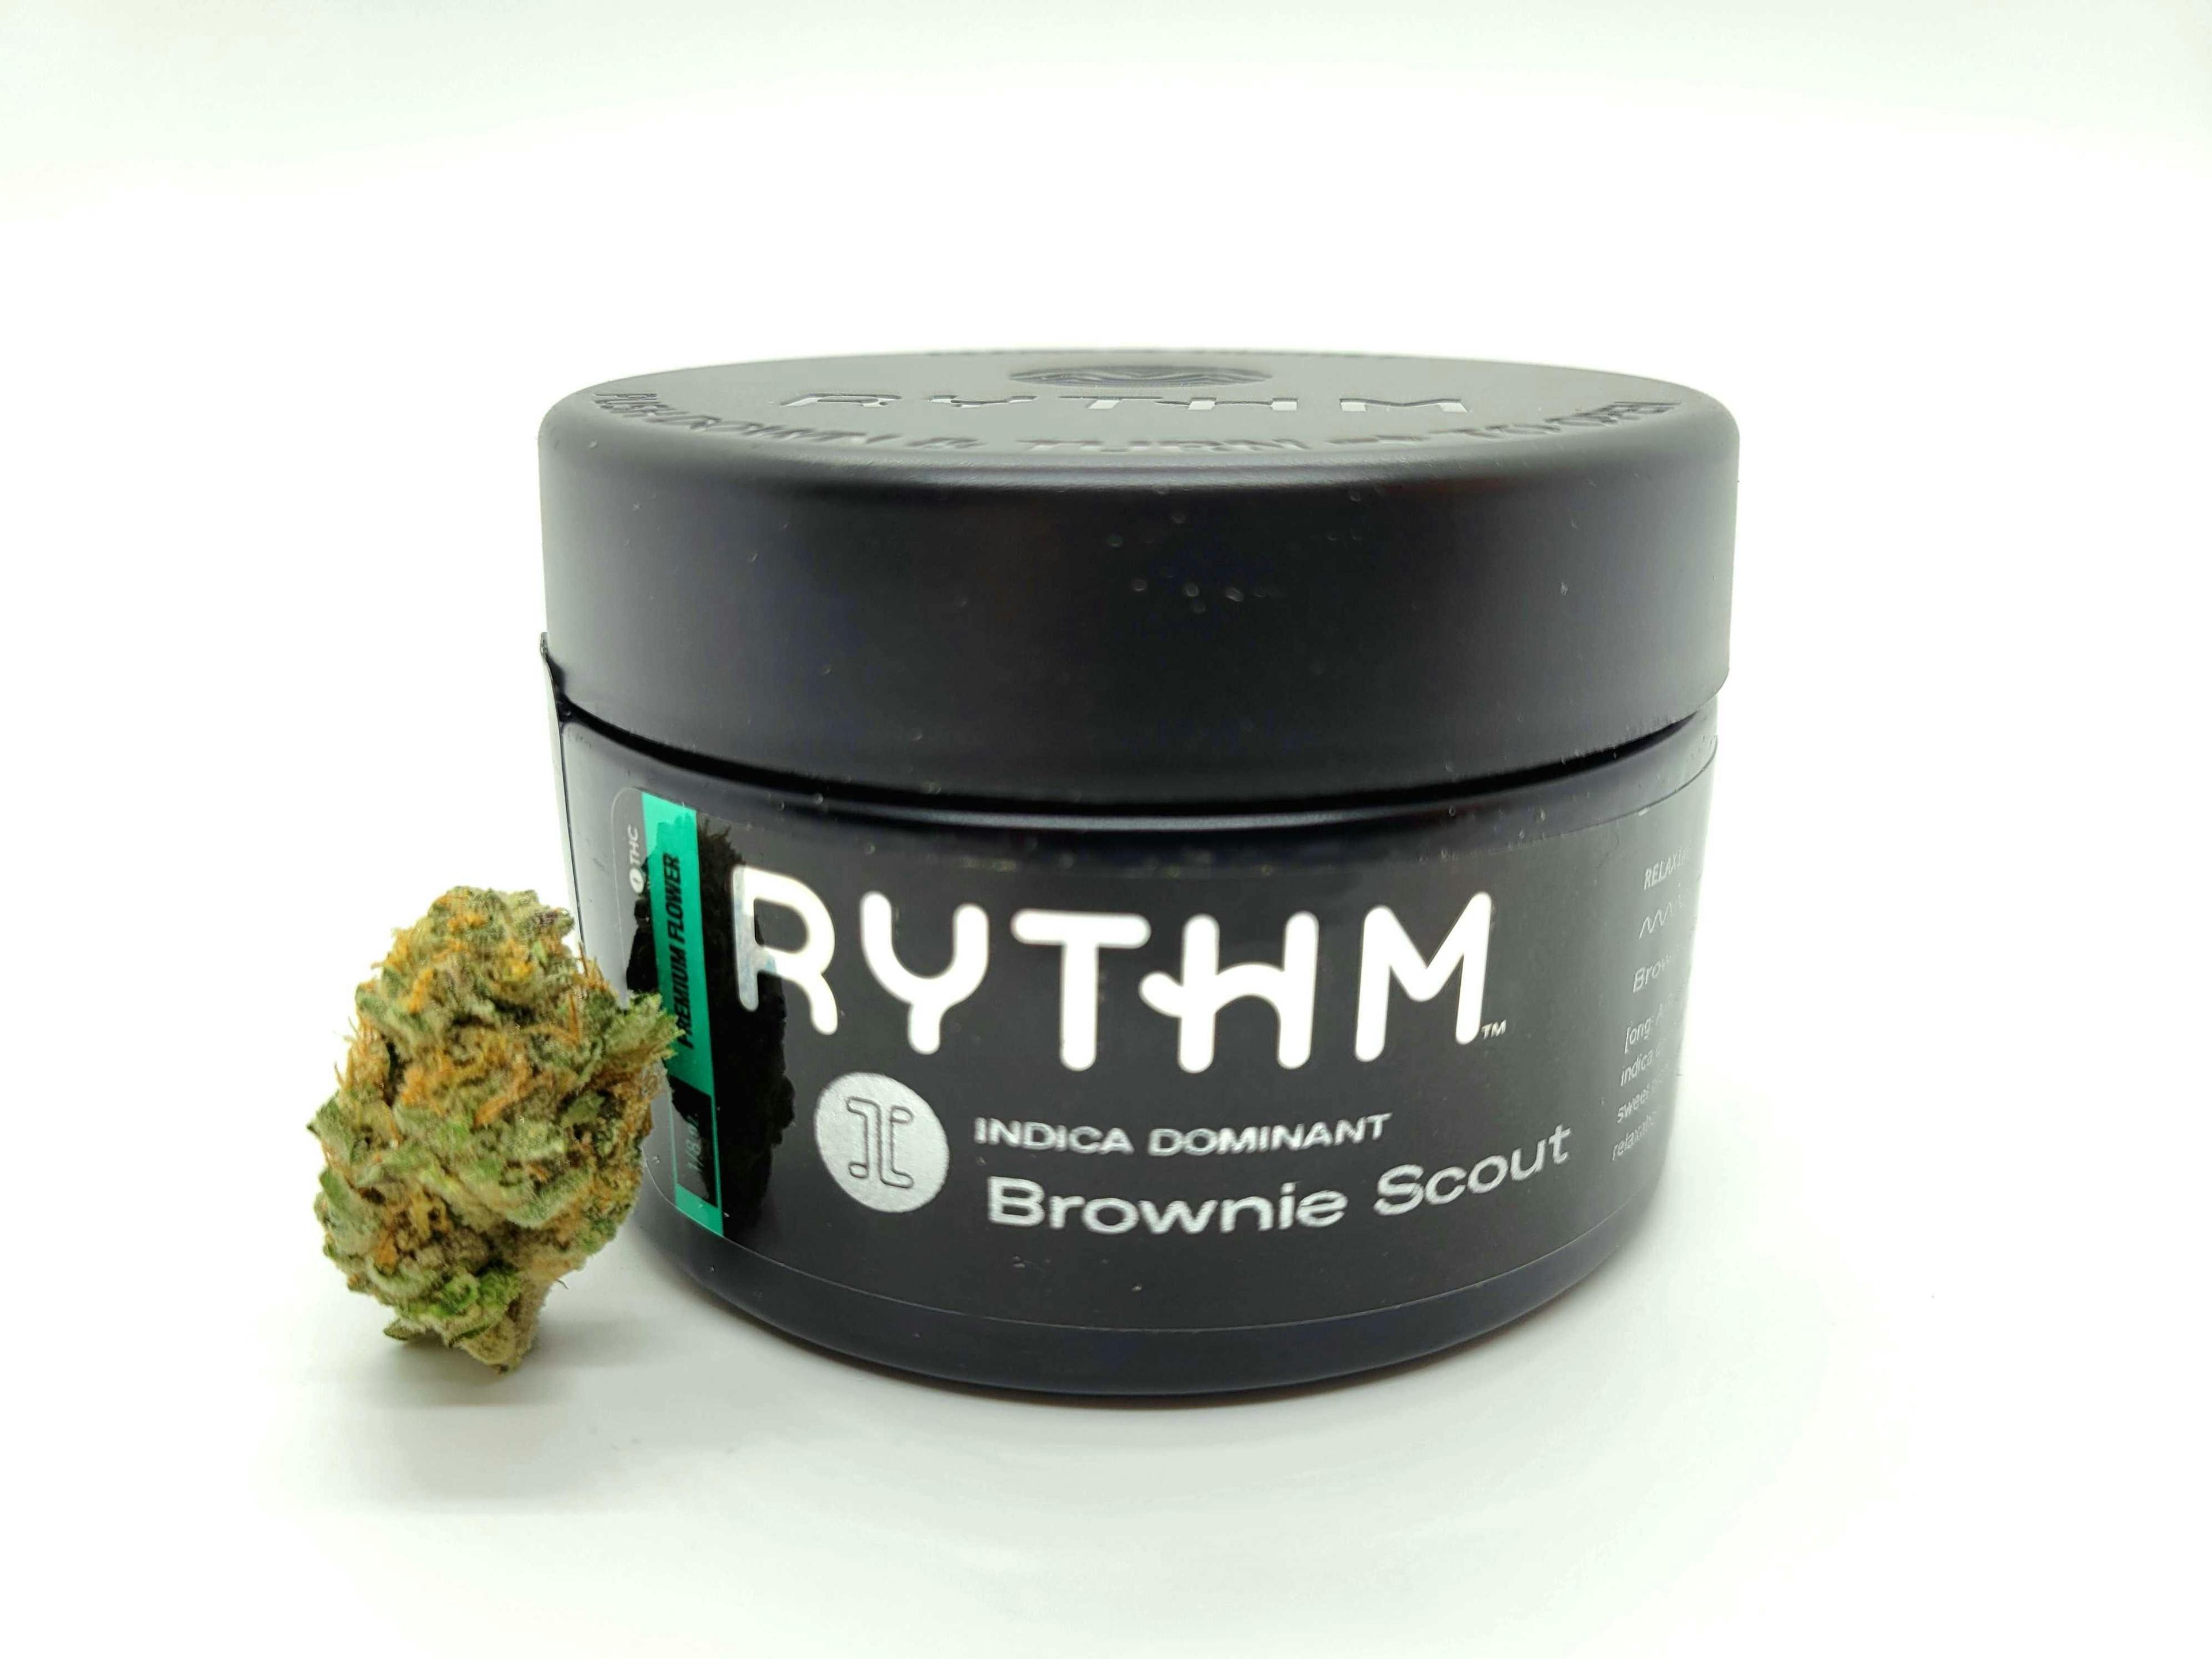 Brownie Scout by Rythm Cannabis